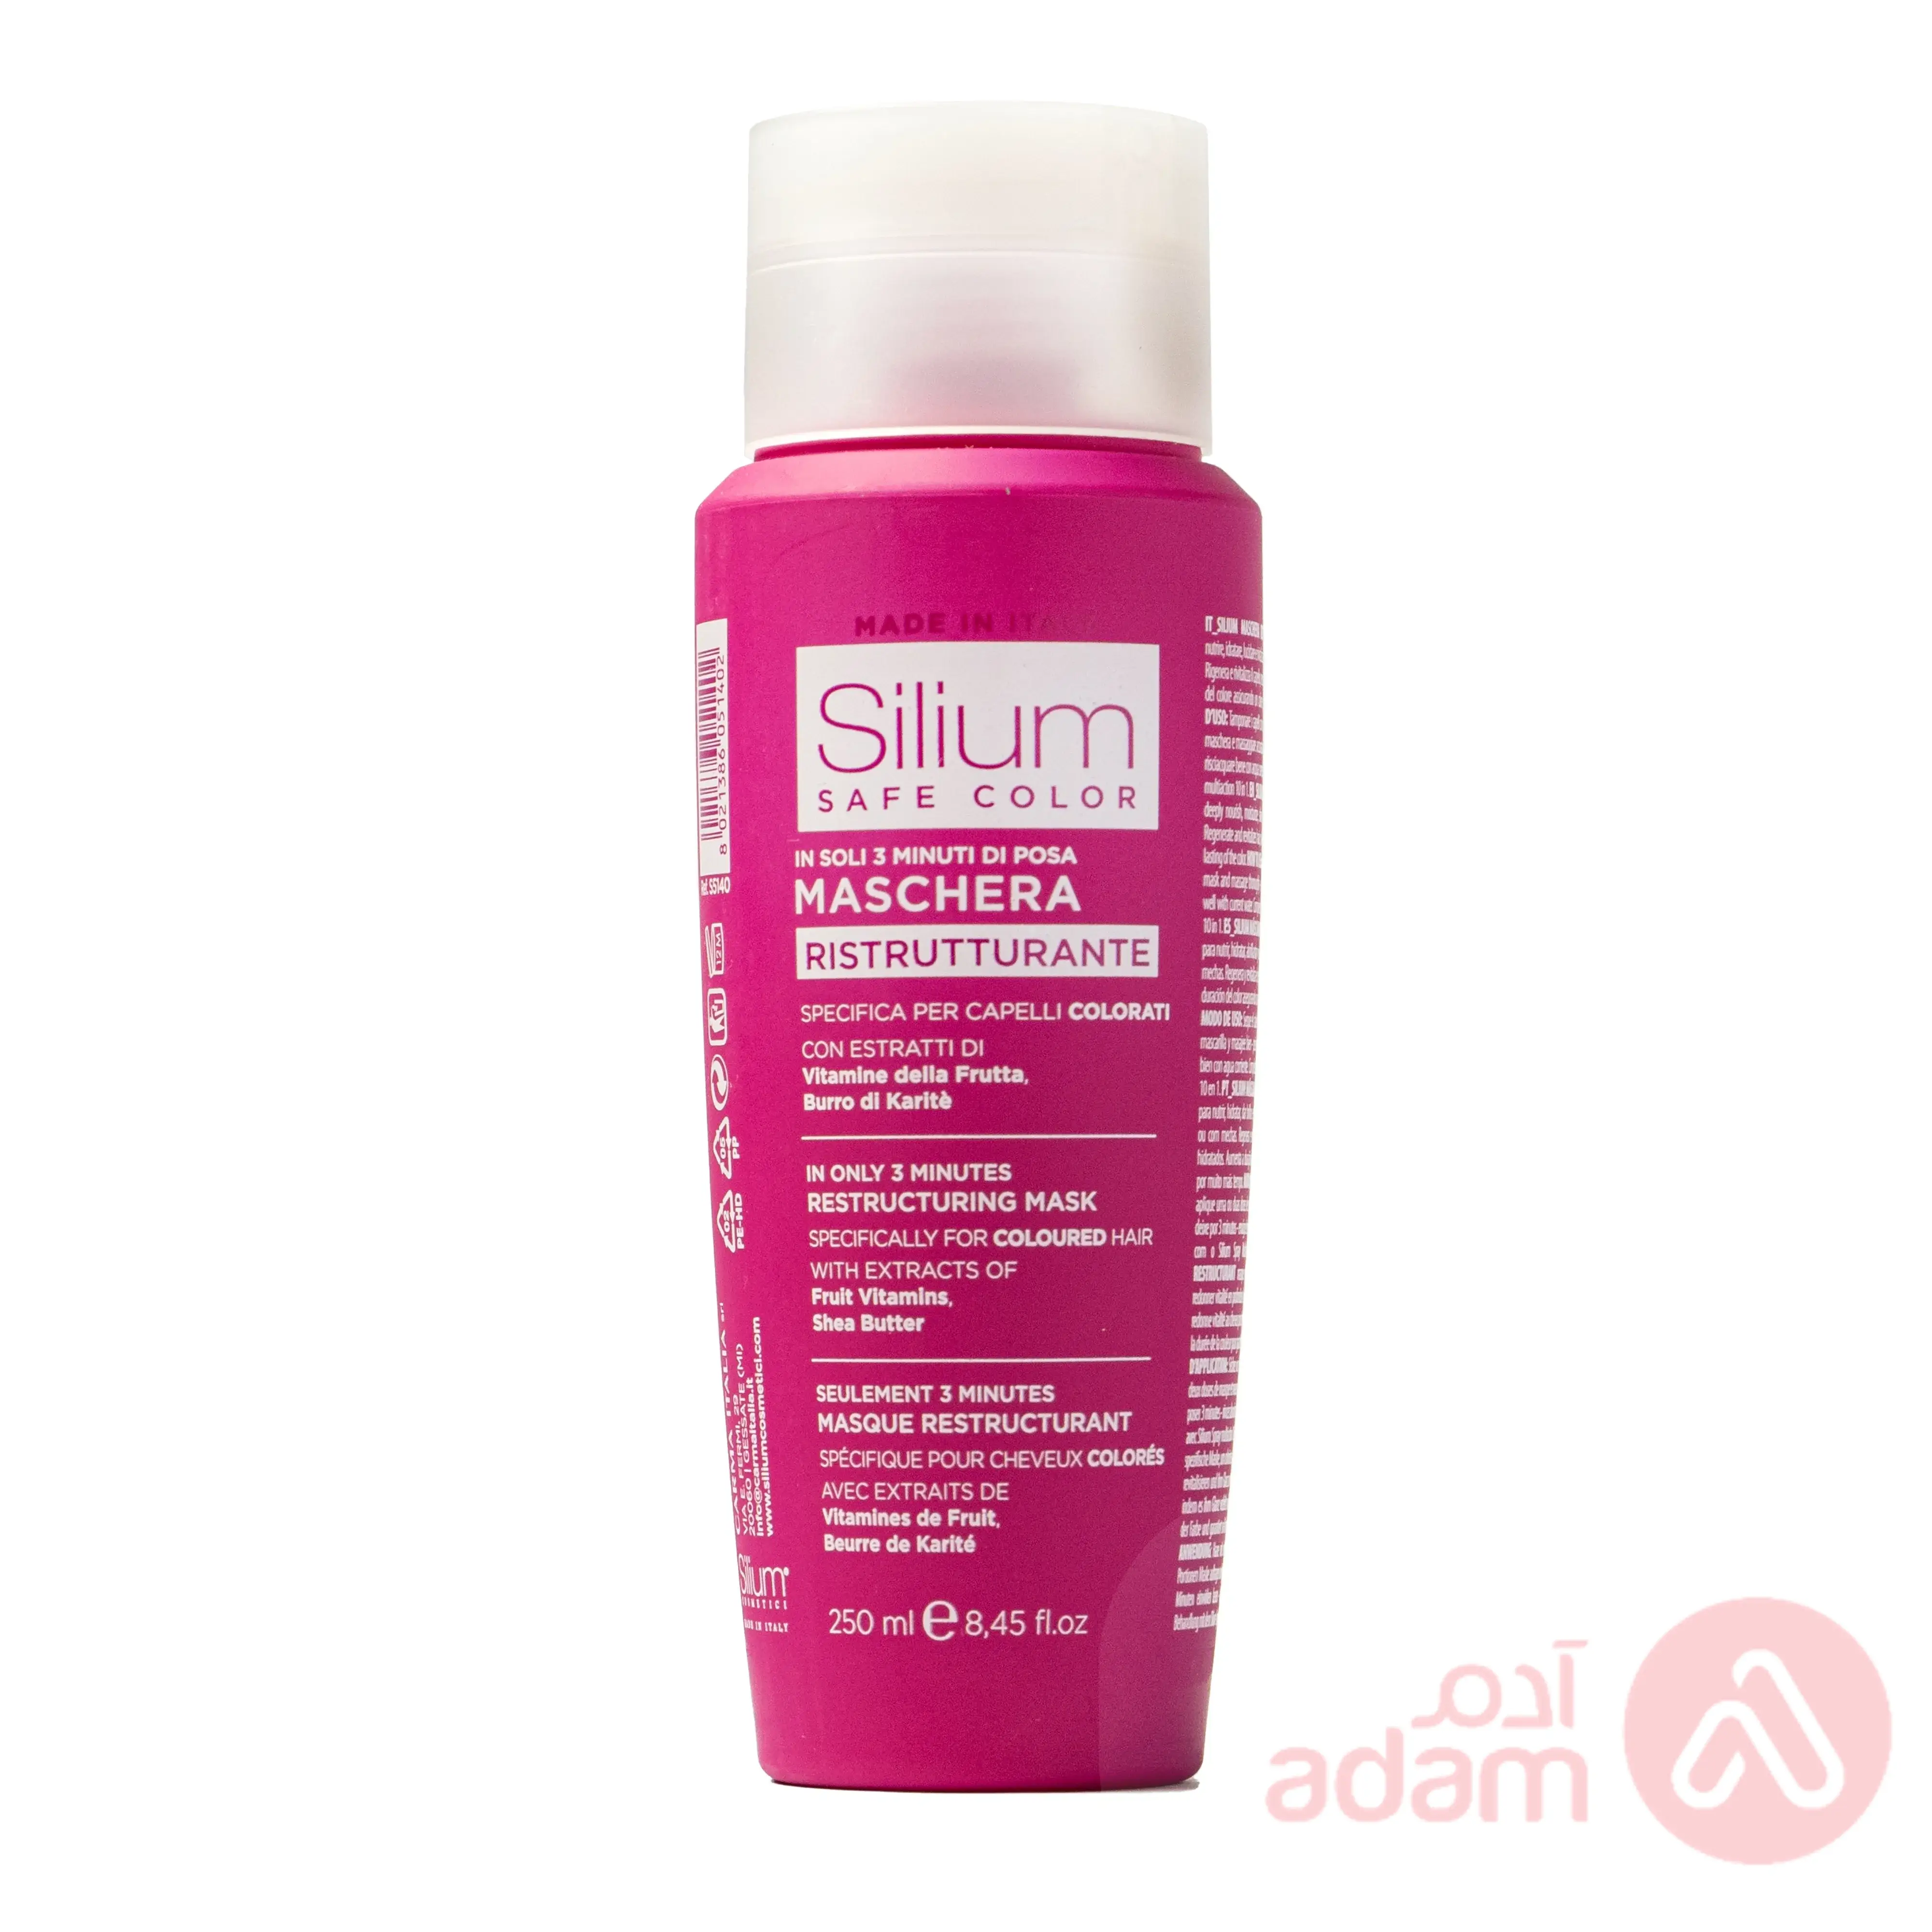 Silium Mask Safe Color | 250Ml